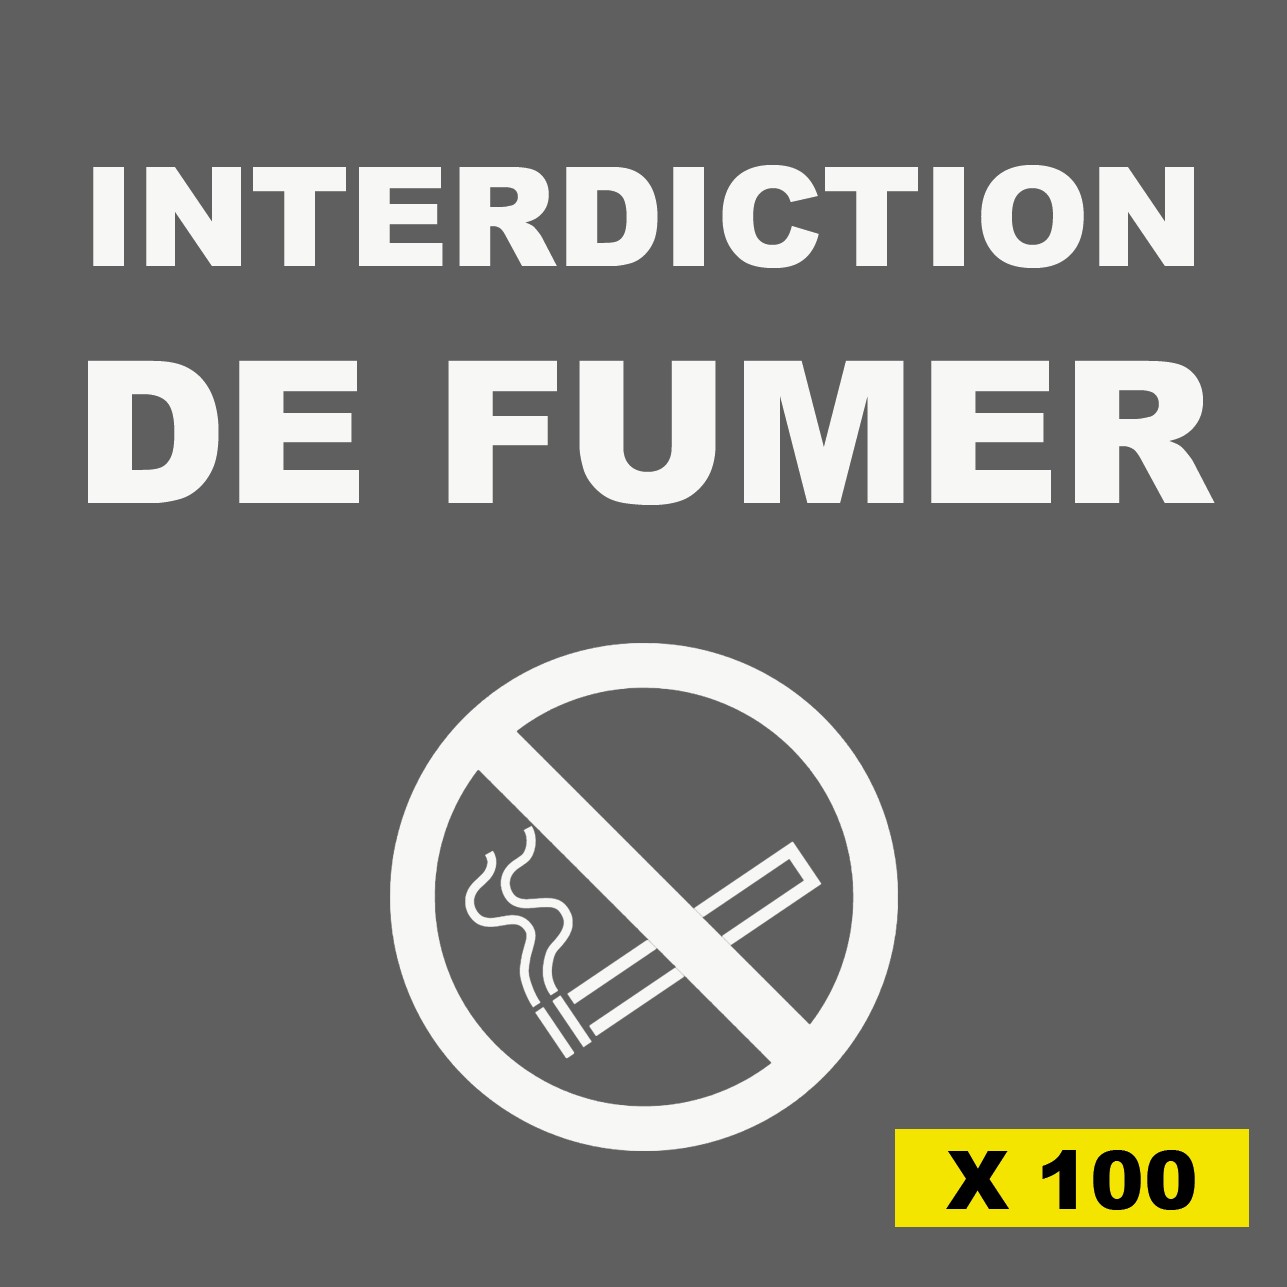 1 Interdiction interdit de fumer rectangle L.148 x H.210 mm Autocollant vinyl waterproof 